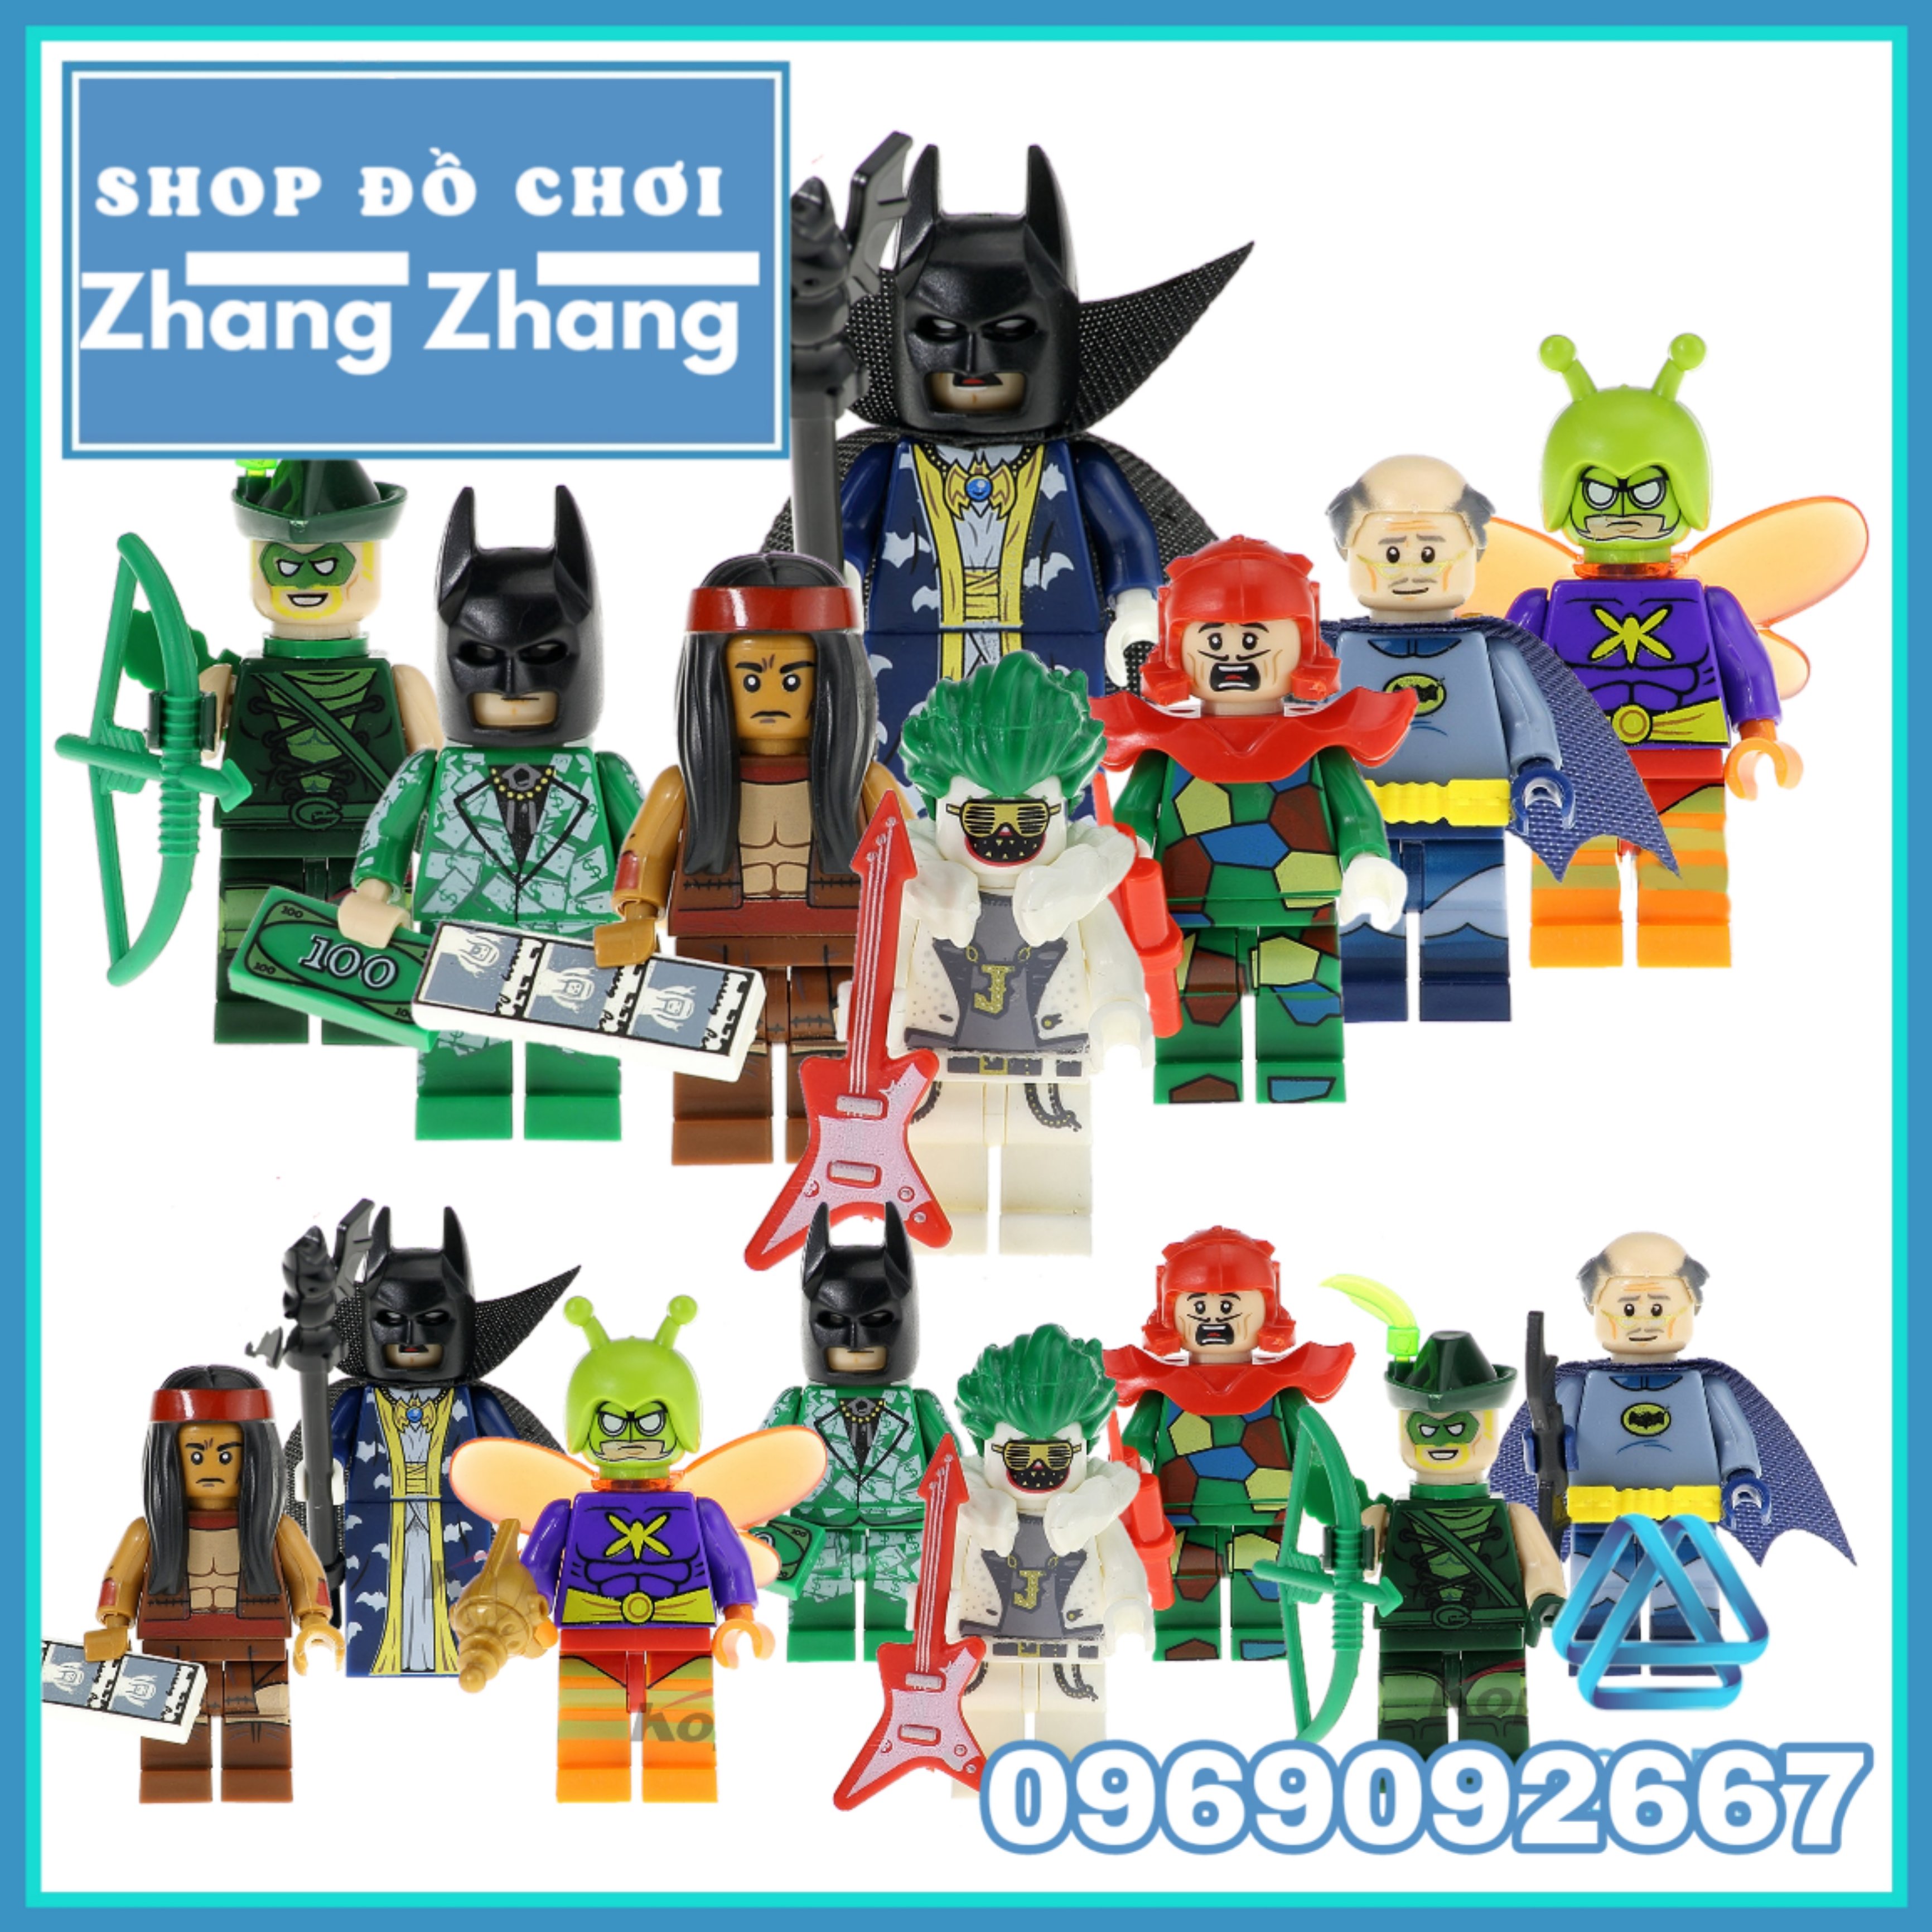 FREESHIP MAX] Đồ chơi Xếp hình Batman Green Arrow Joker Apache Crazy Quilt  Killer Moth Gotham Lego Minifigures POGO PG8110 [Shop Đồ Chơi Zhang Zhang]  